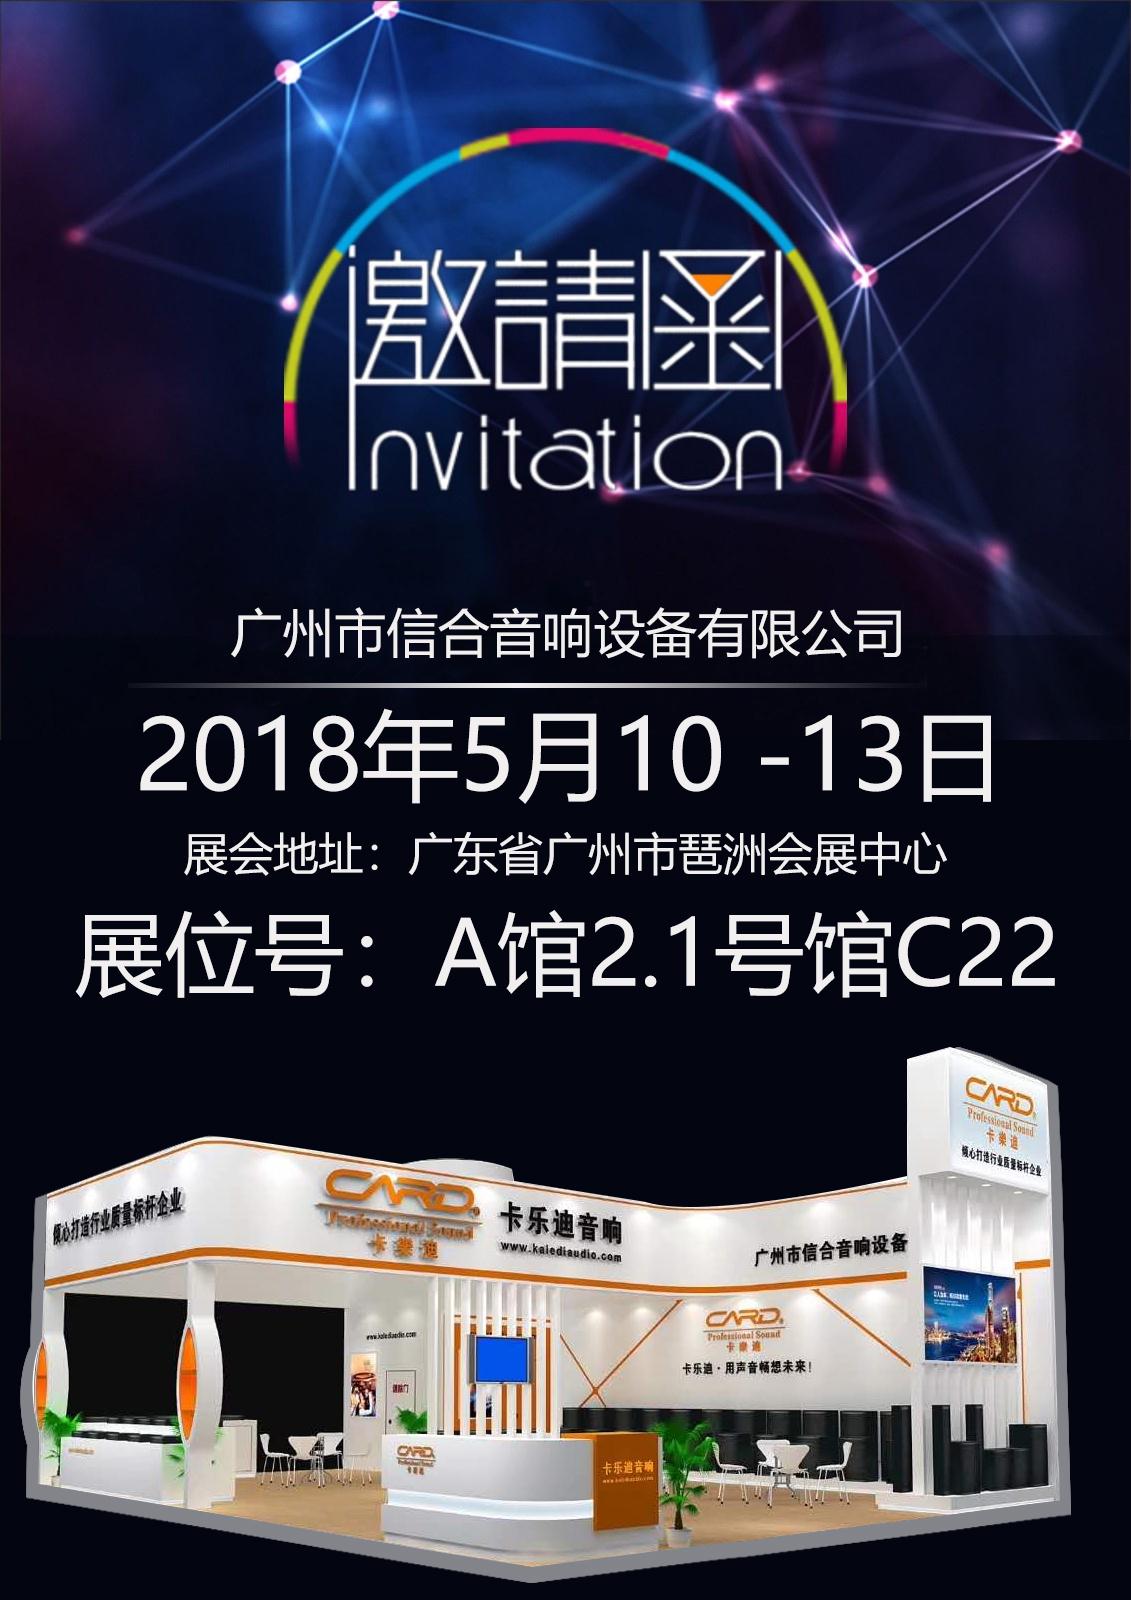 CARD卡乐迪2018年广州国际专业音响展览会现场直击